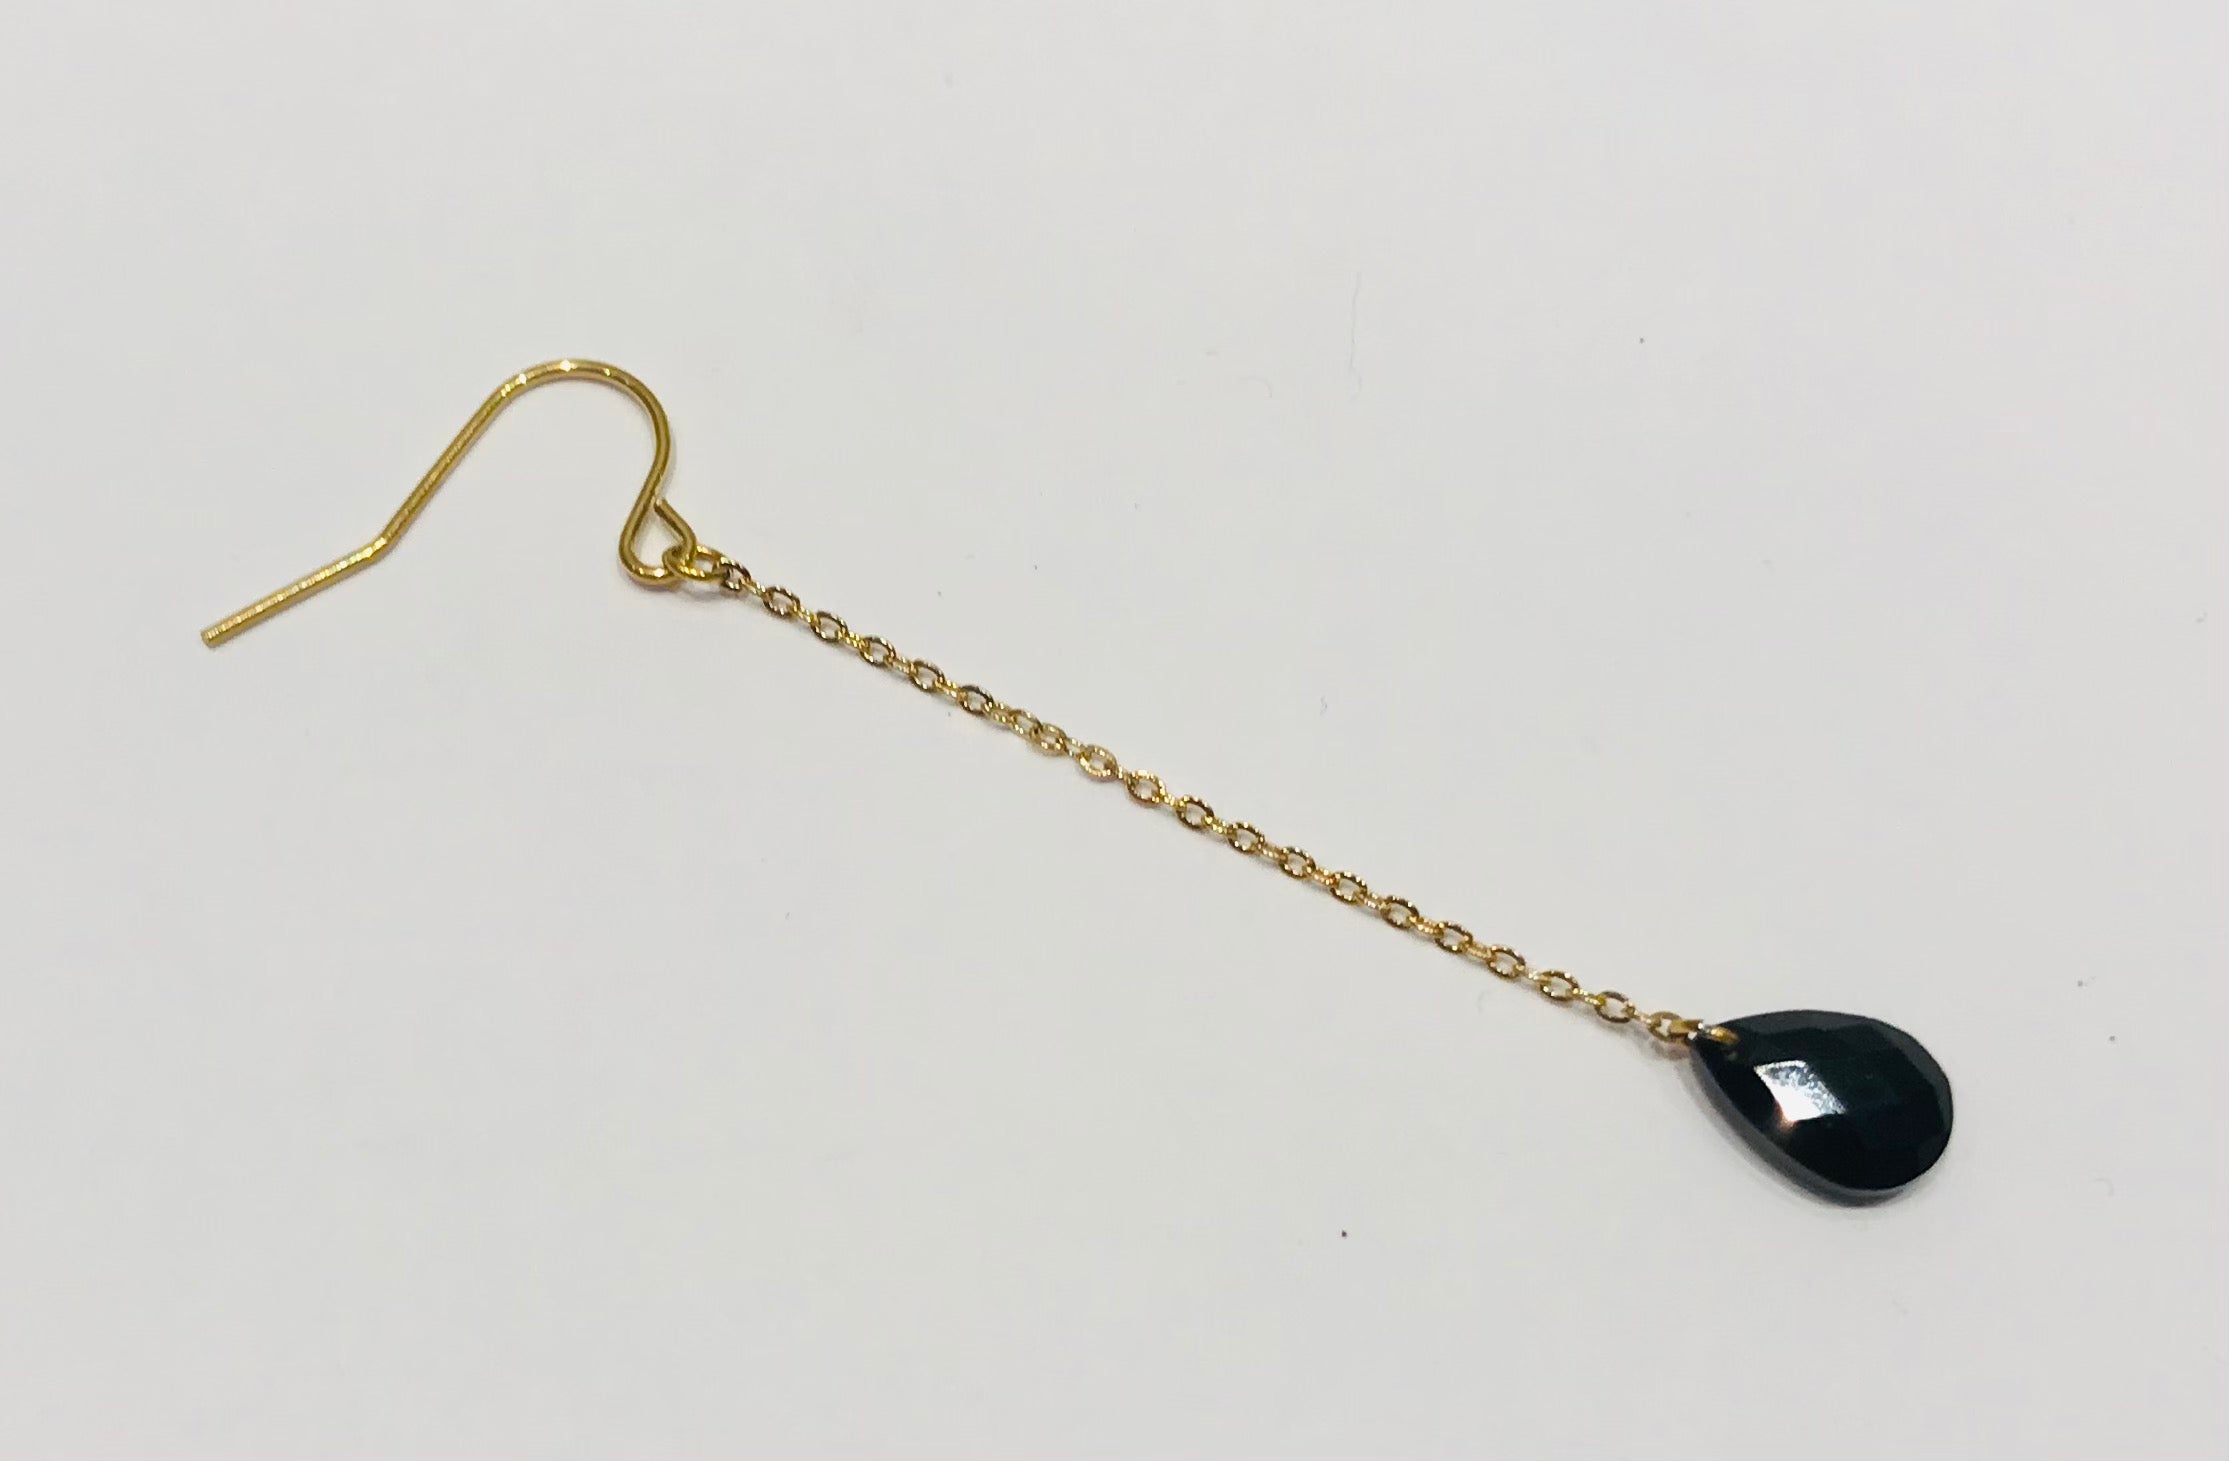 SAM&CEL steel hook earrings with black stone